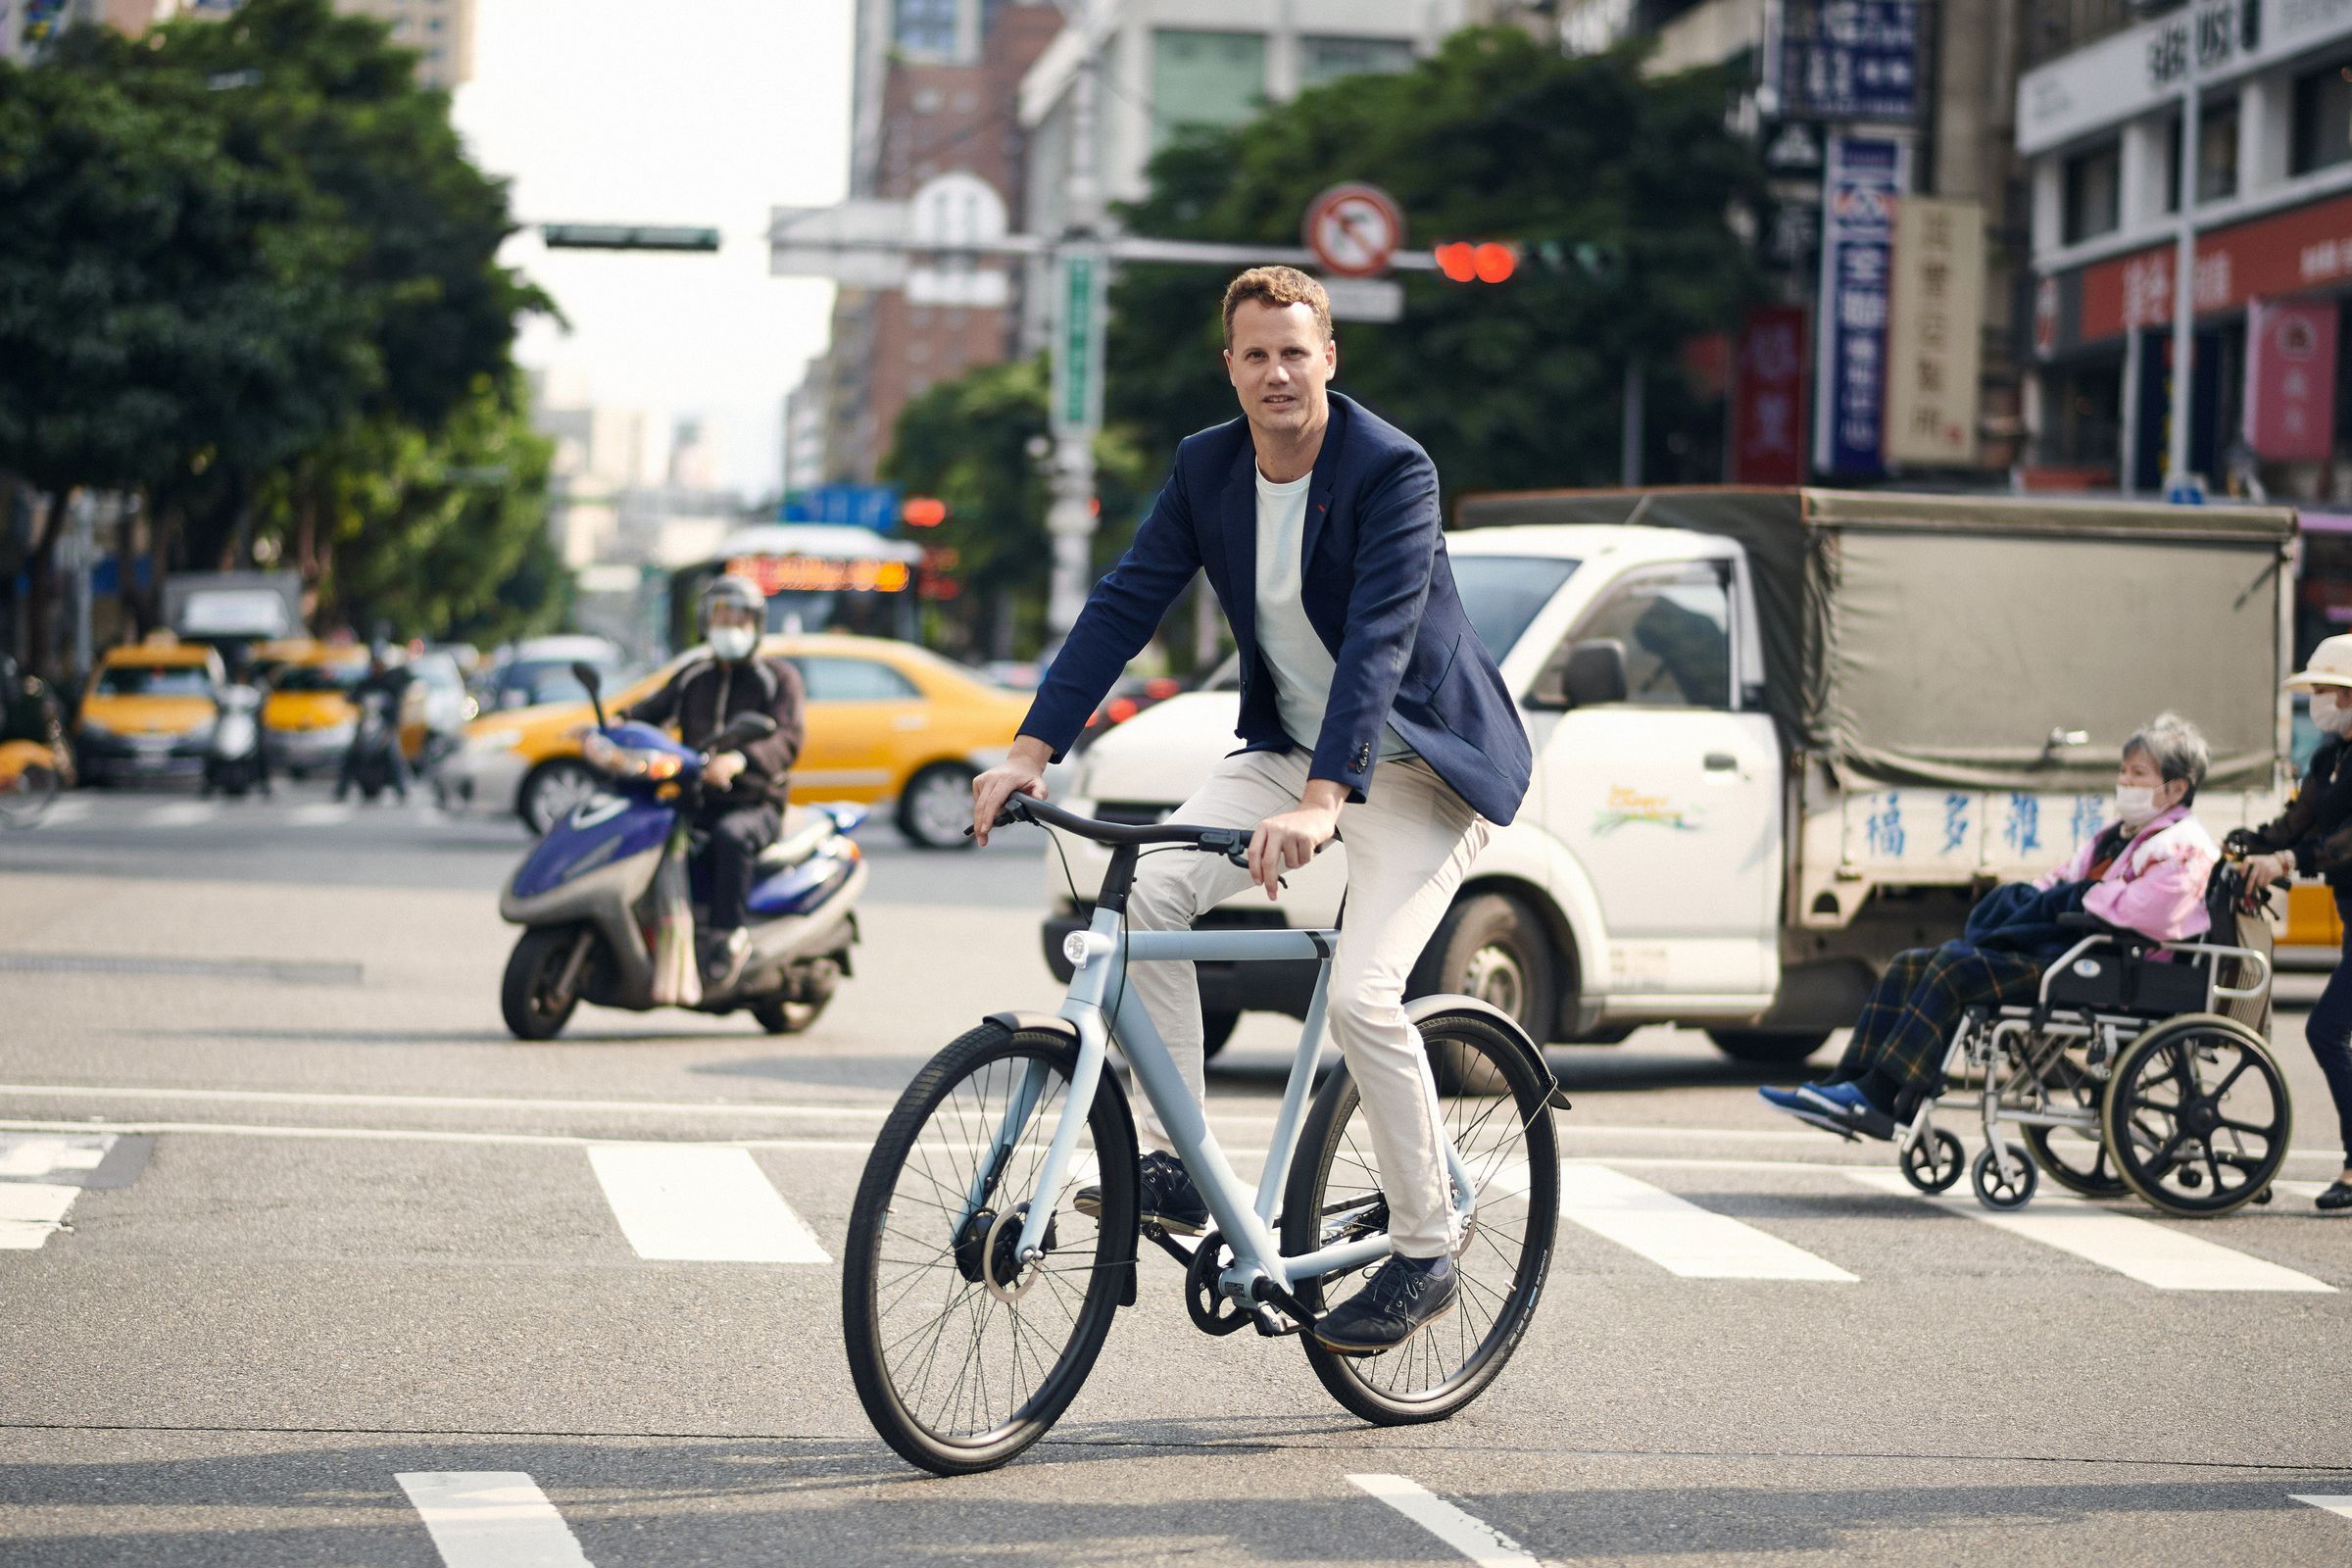 VanMoof co-founder Ties Carlier on an S3 electric bike.